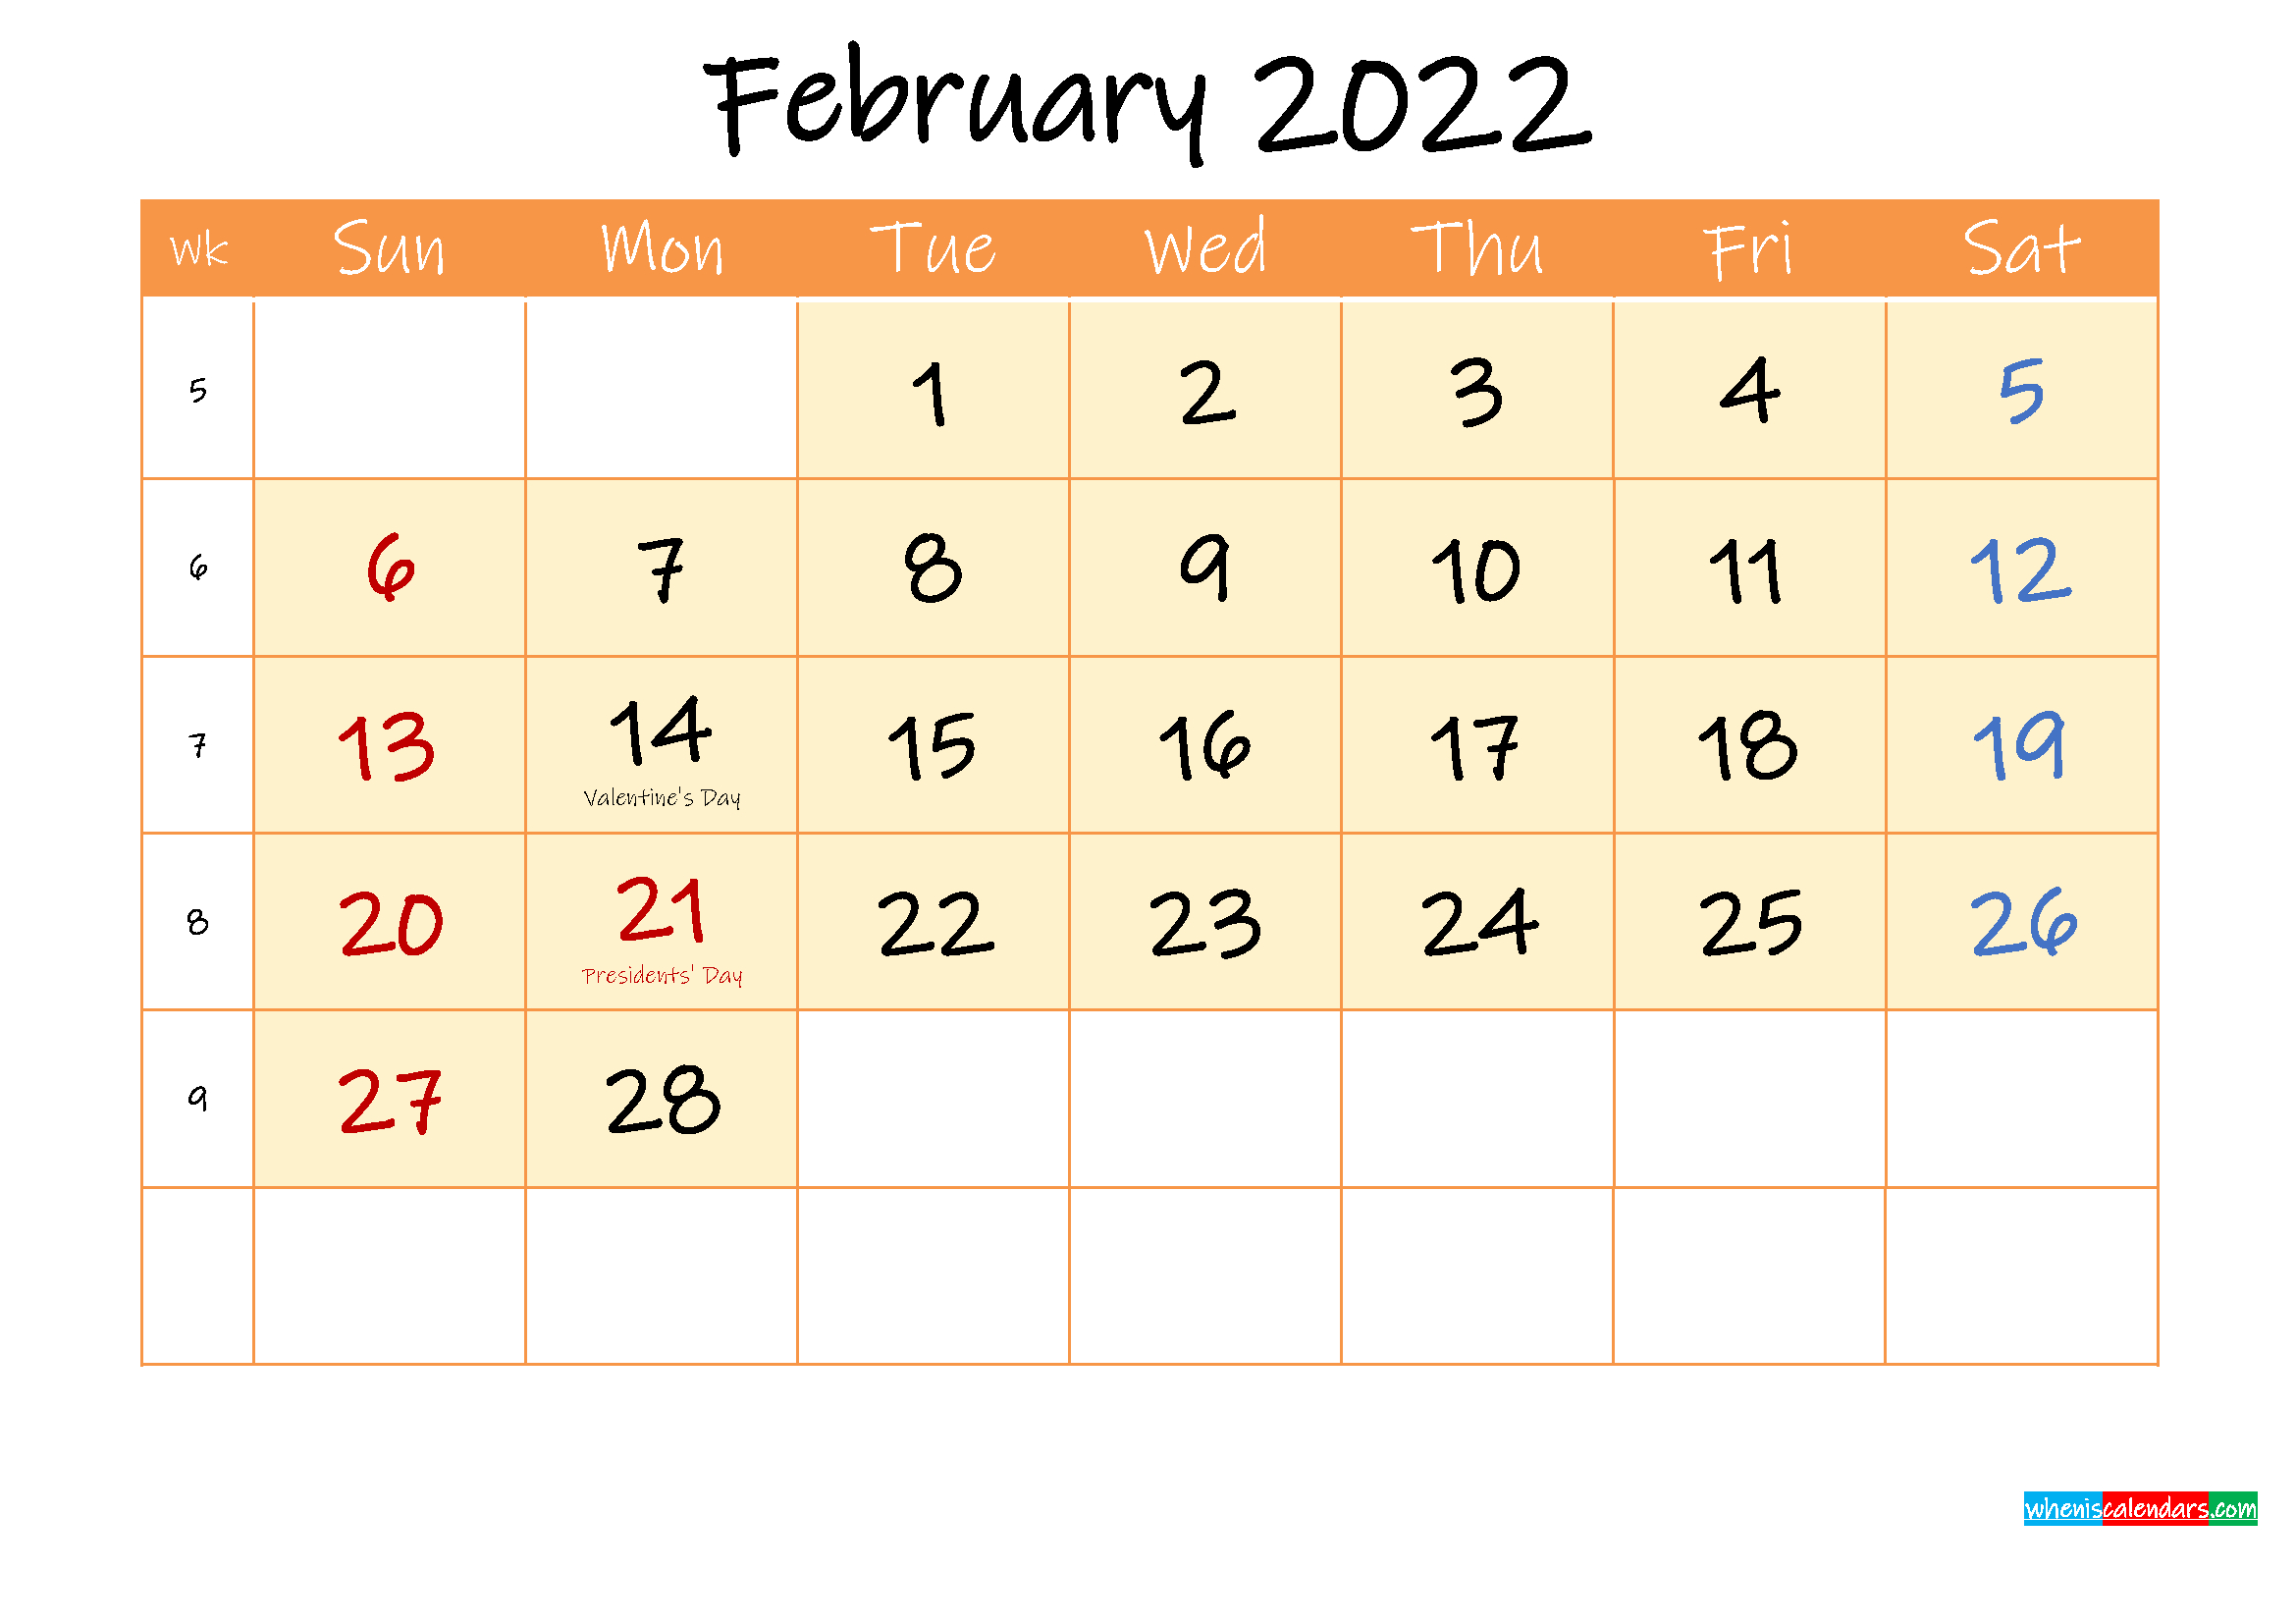 February 2022 Free Printable Calendar - Template Ink22M158